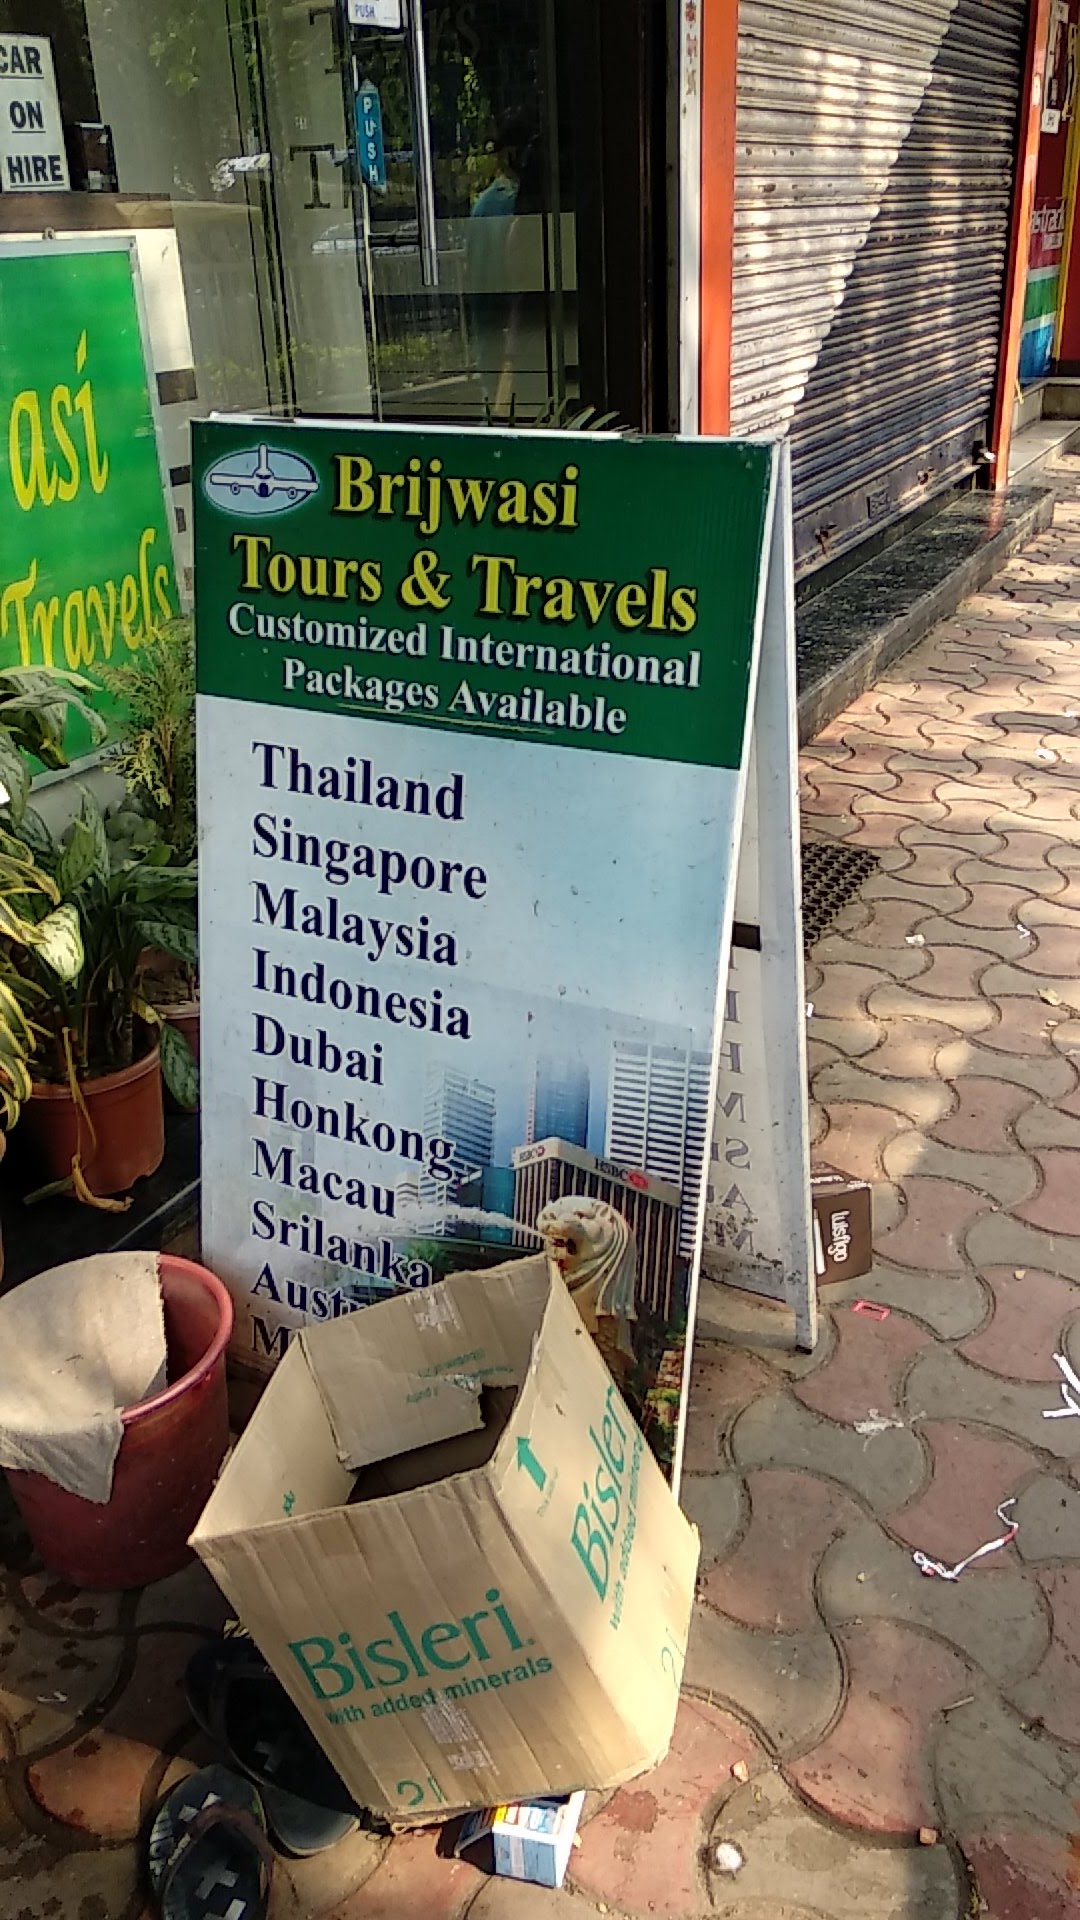 Brijwasi Tours & Travels